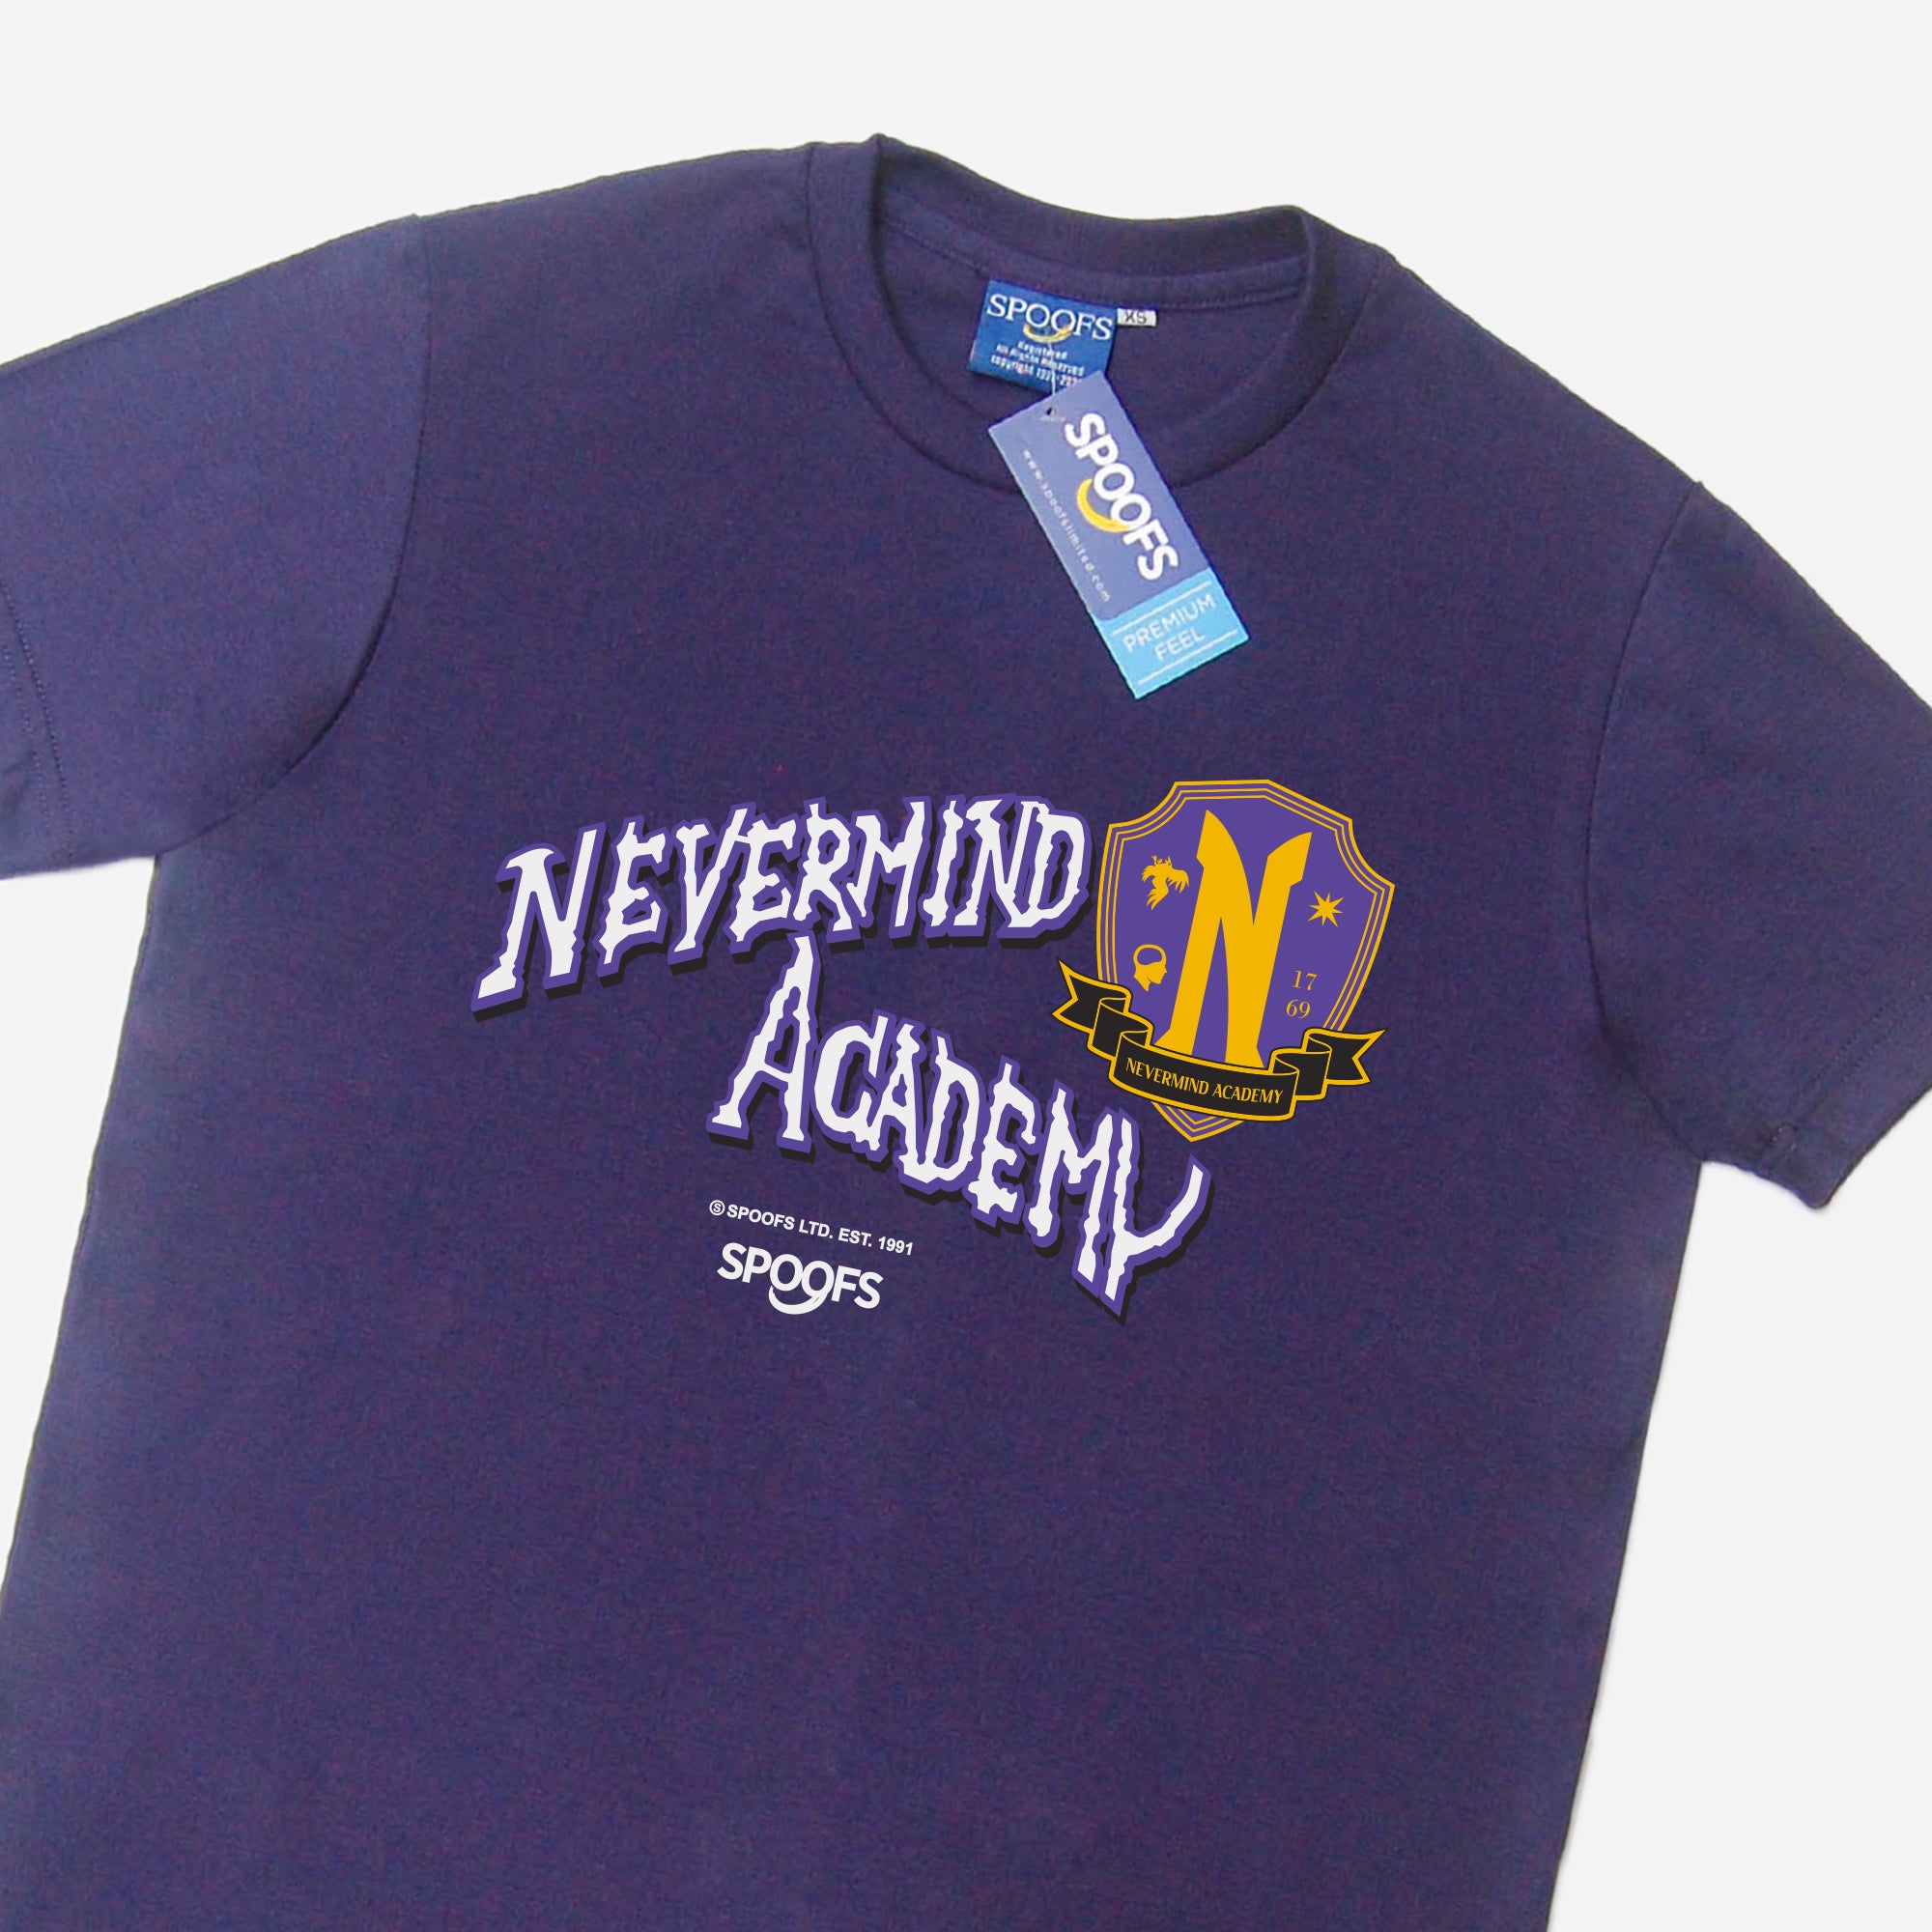 Nevermind Academy (Navy Blue)